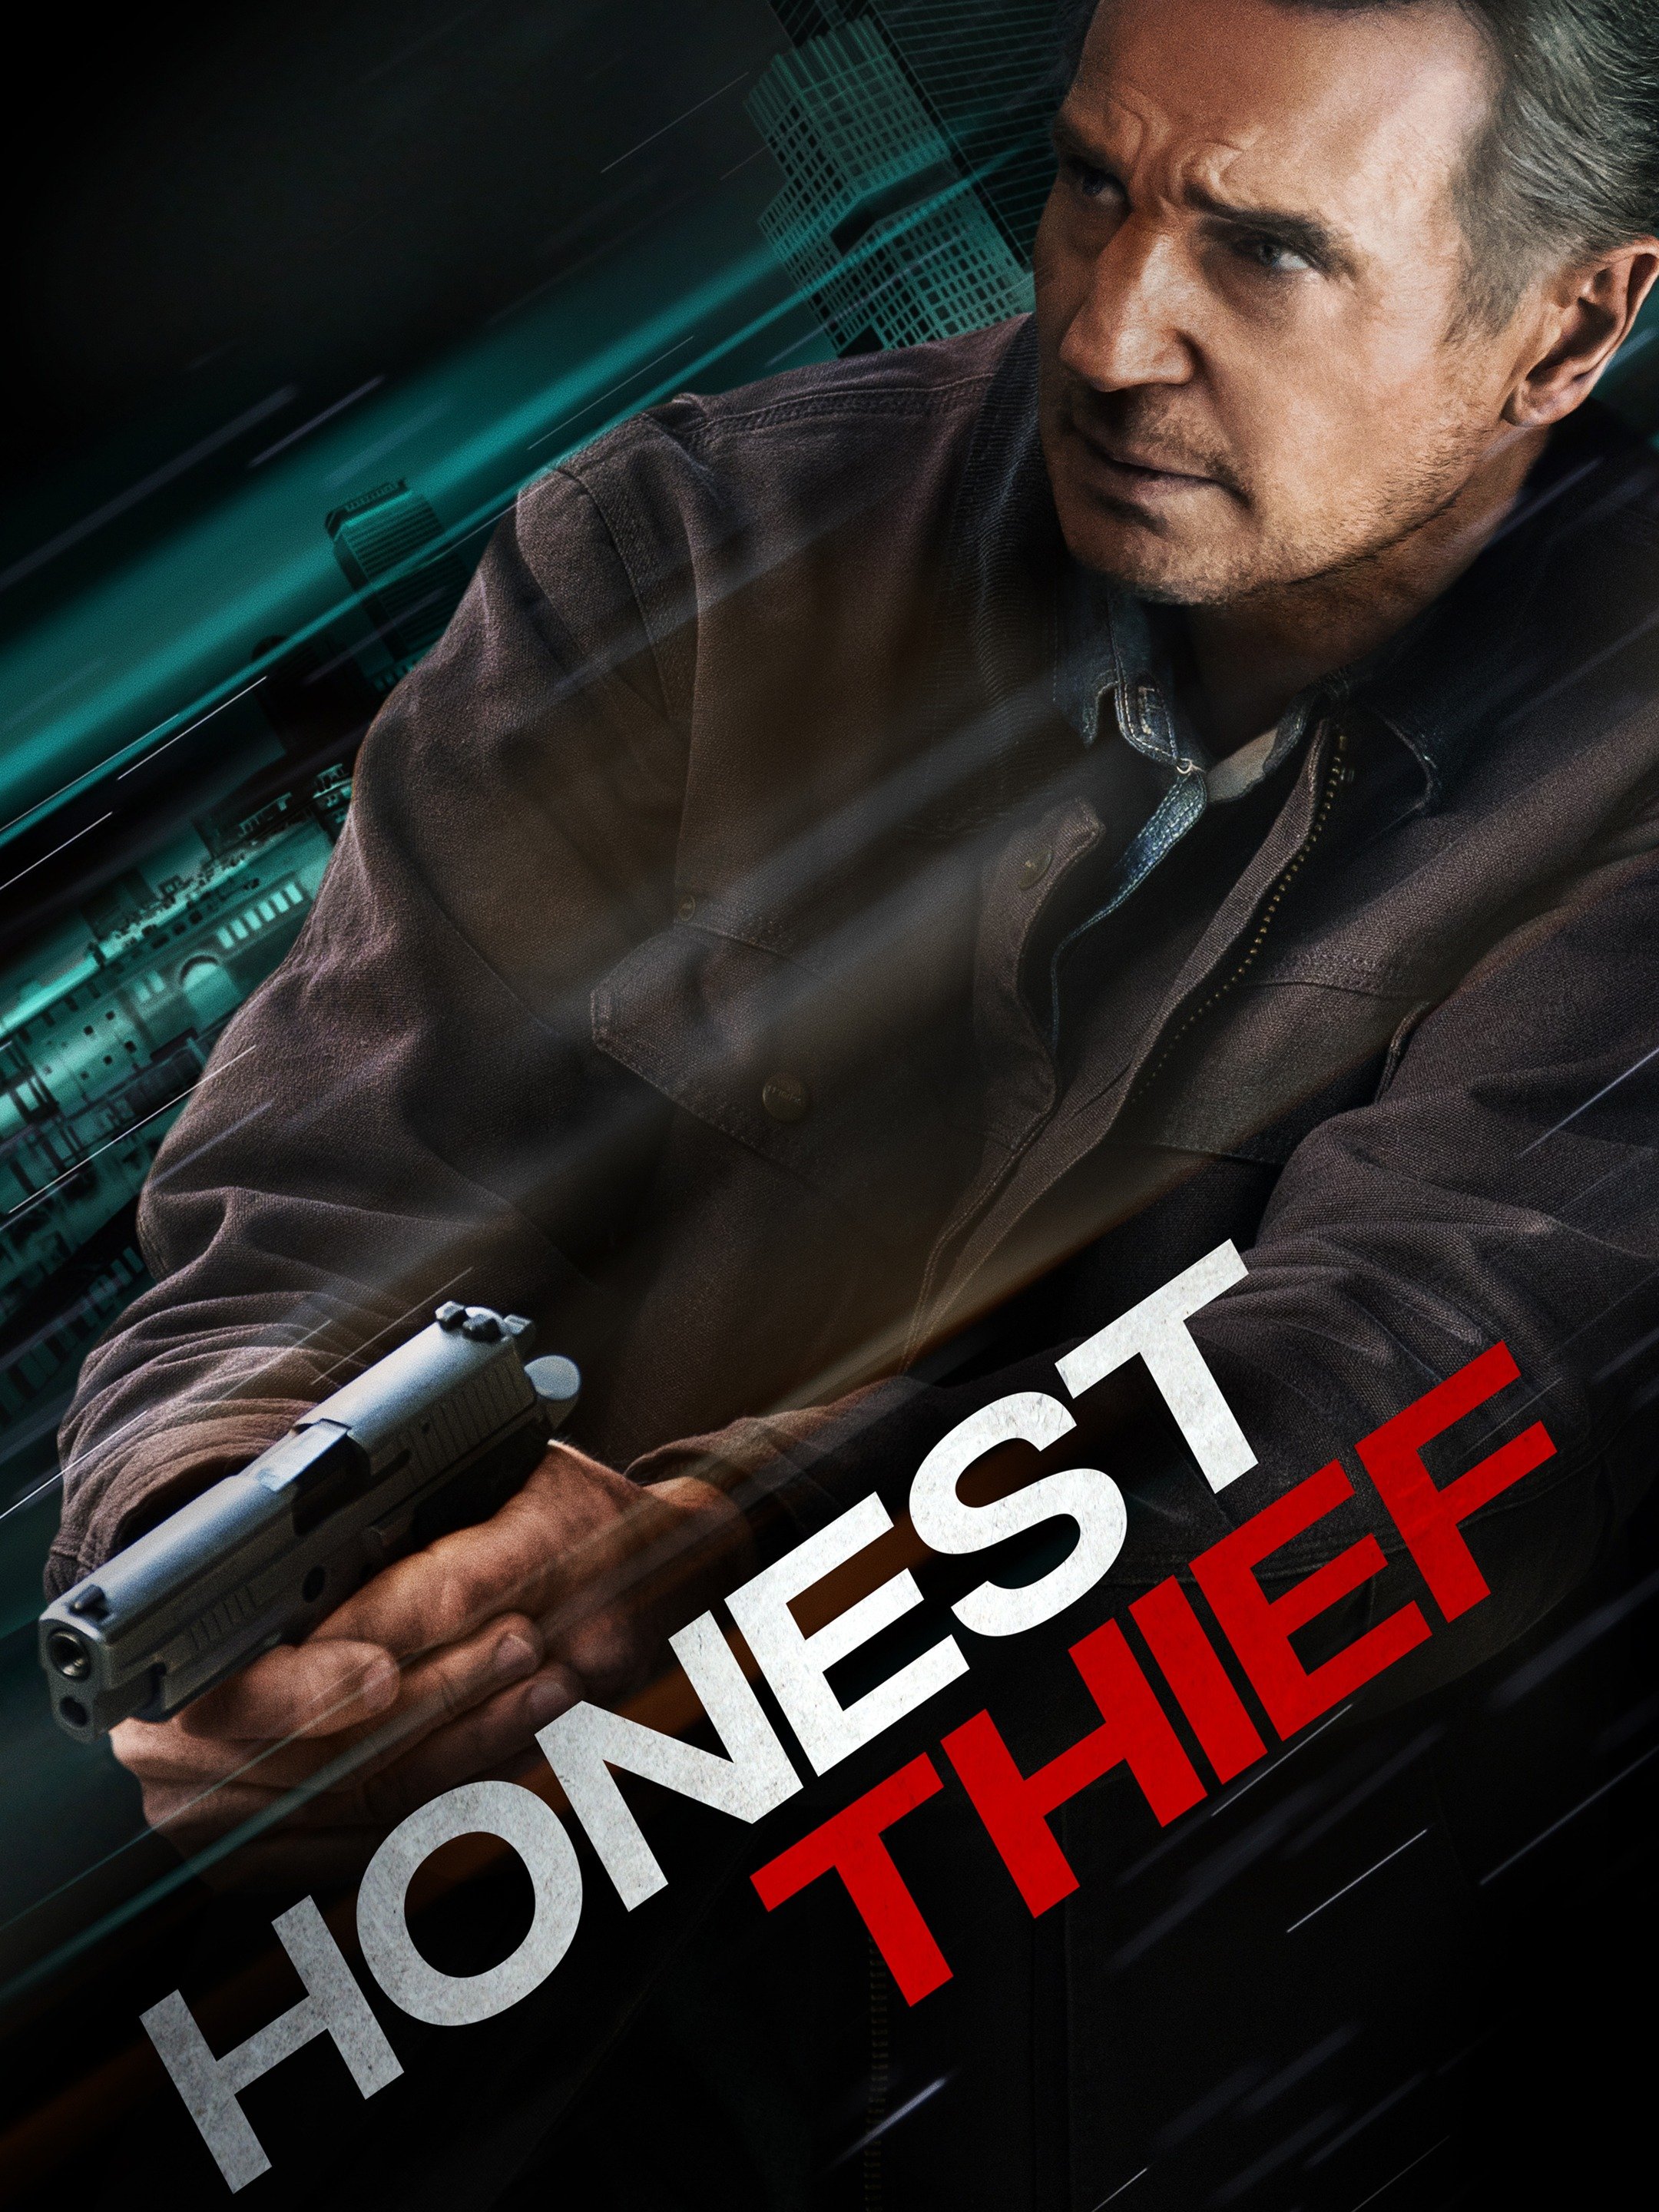 Honest Thief - Rotten Tomatoes